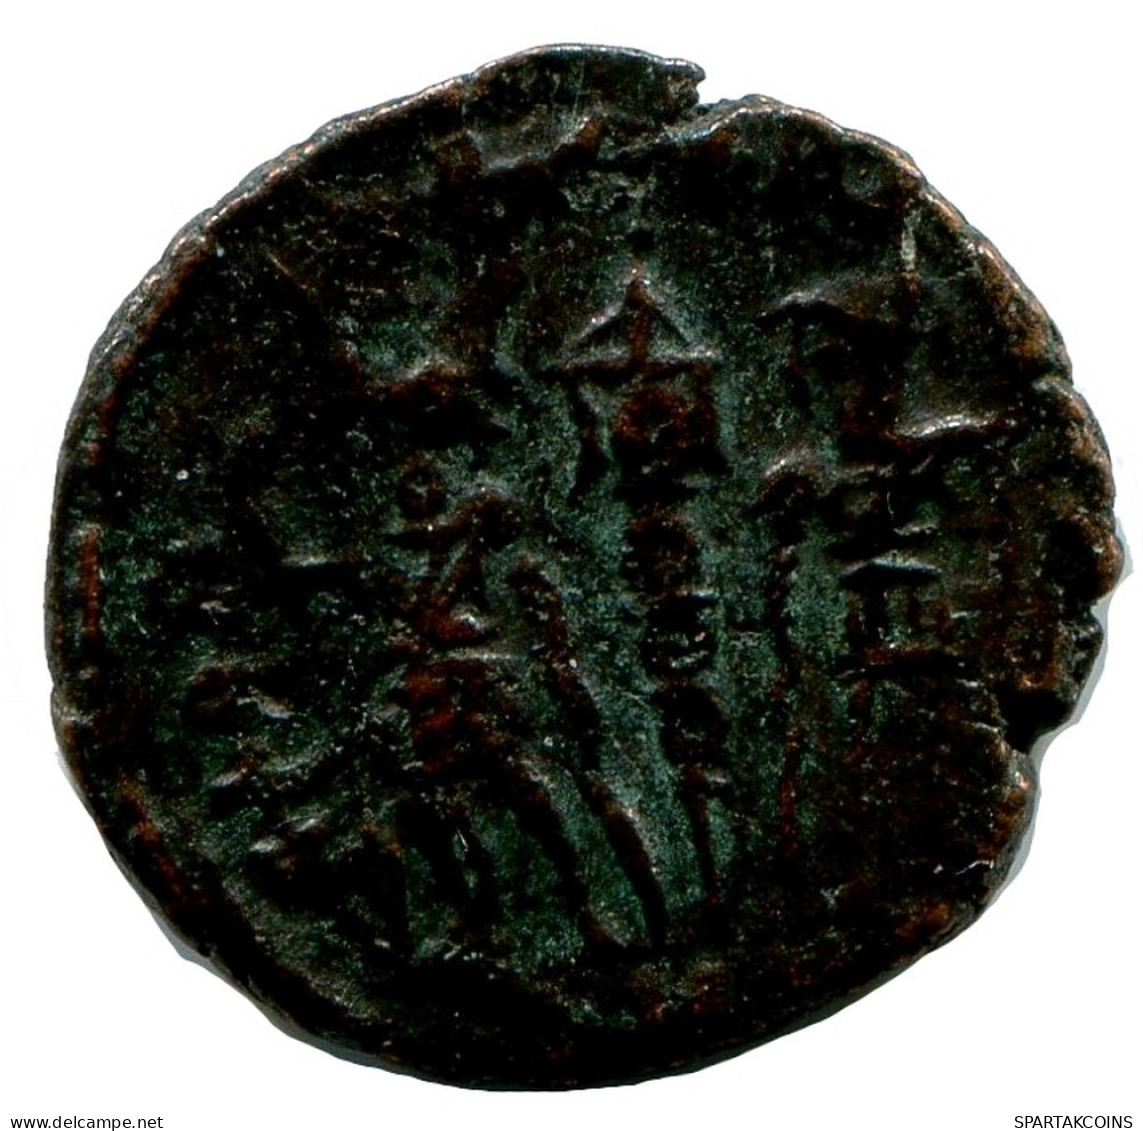 CONSTANTIUS II MINT UNCERTAIN FOUND IN IHNASYAH HOARD EGYPT #ANC10122.14.U.A - L'Empire Chrétien (307 à 363)